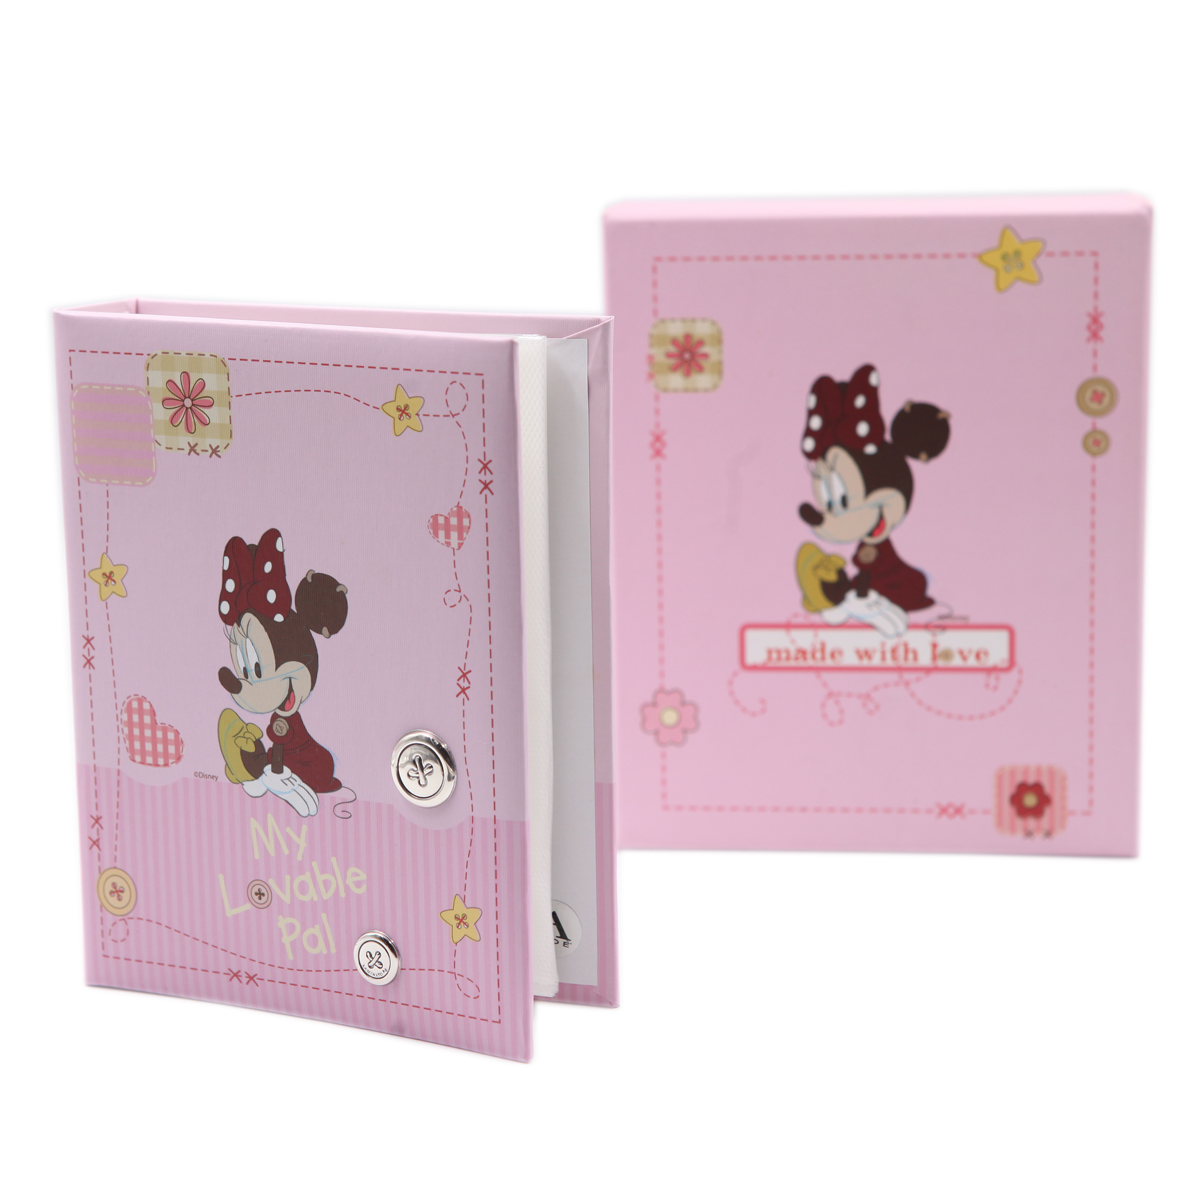 Children’s Disney Minnie Mouse Album